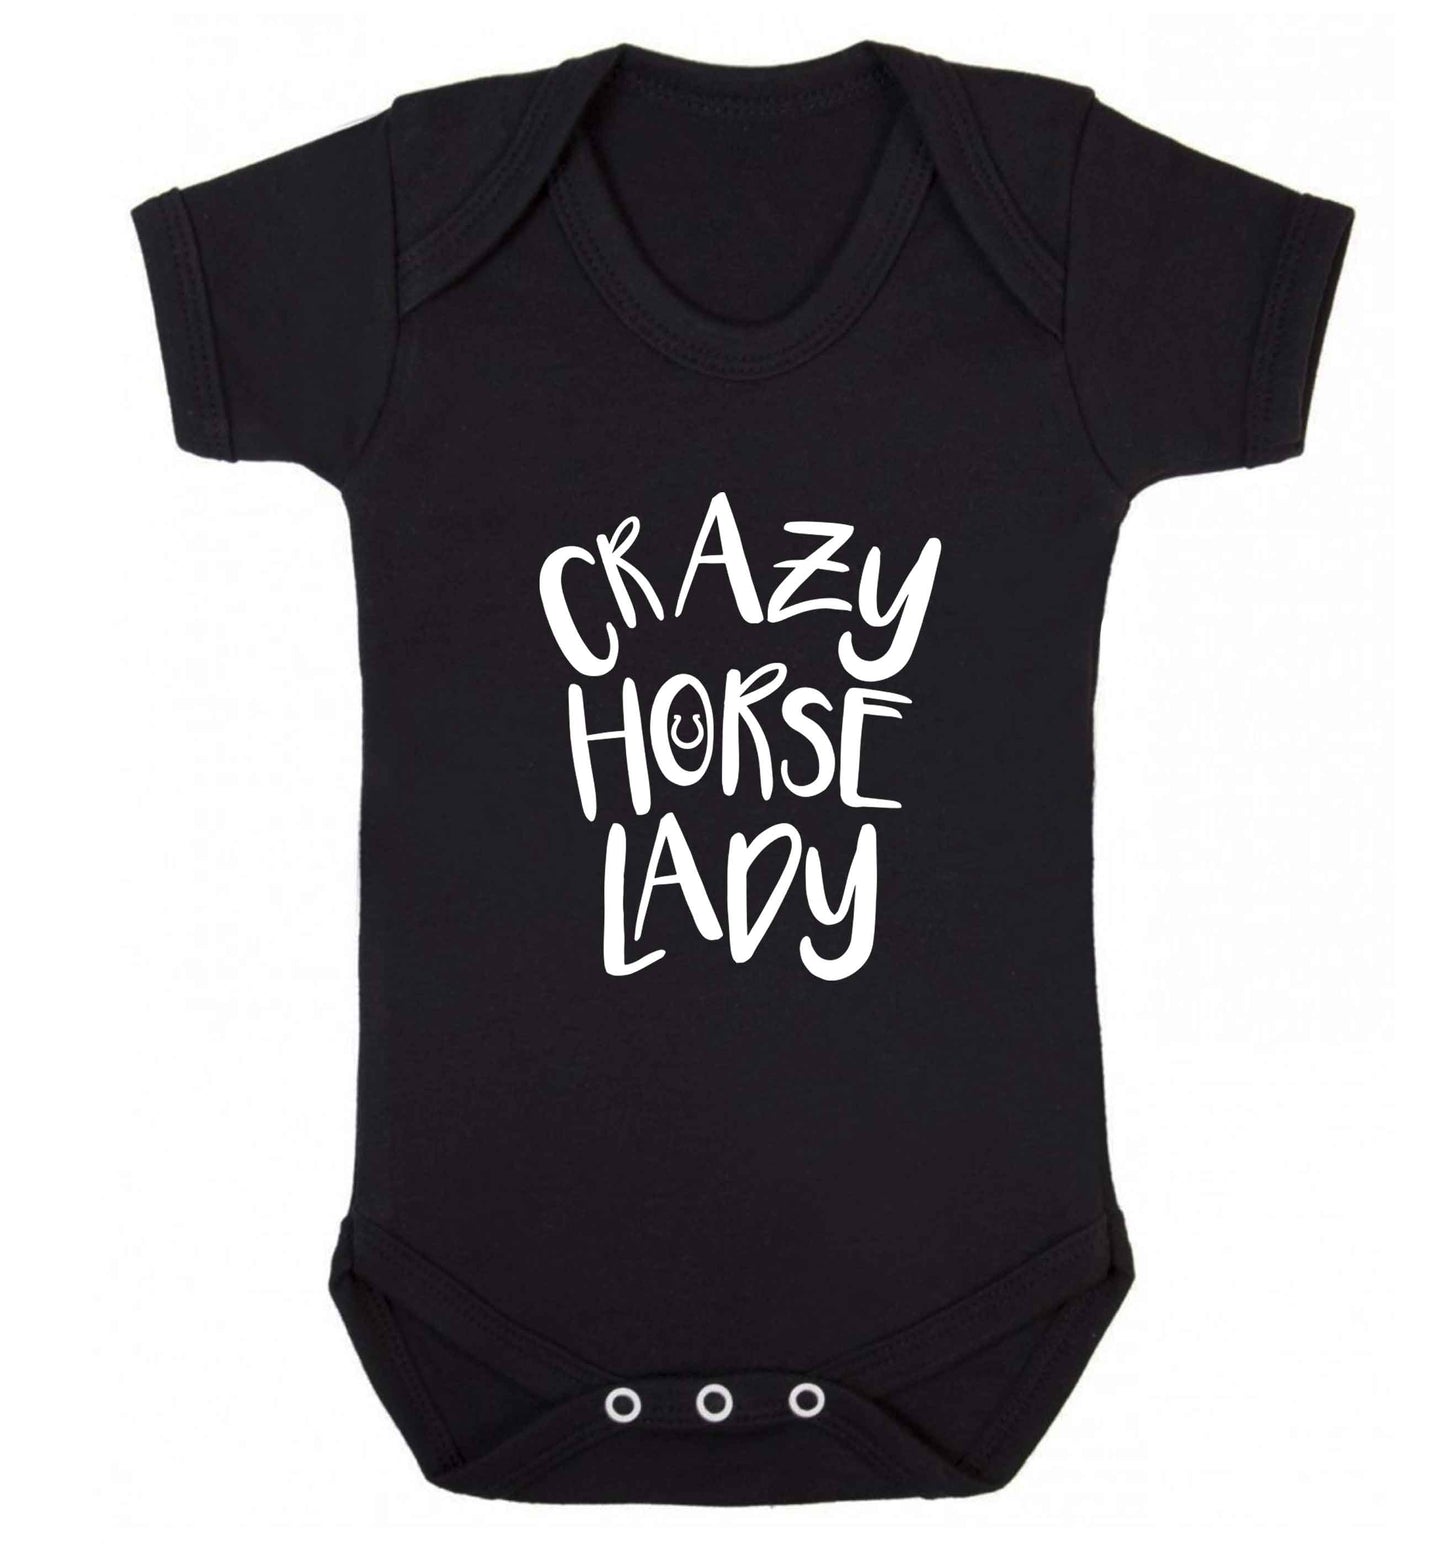 Crazy horse lady baby vest black 18-24 months